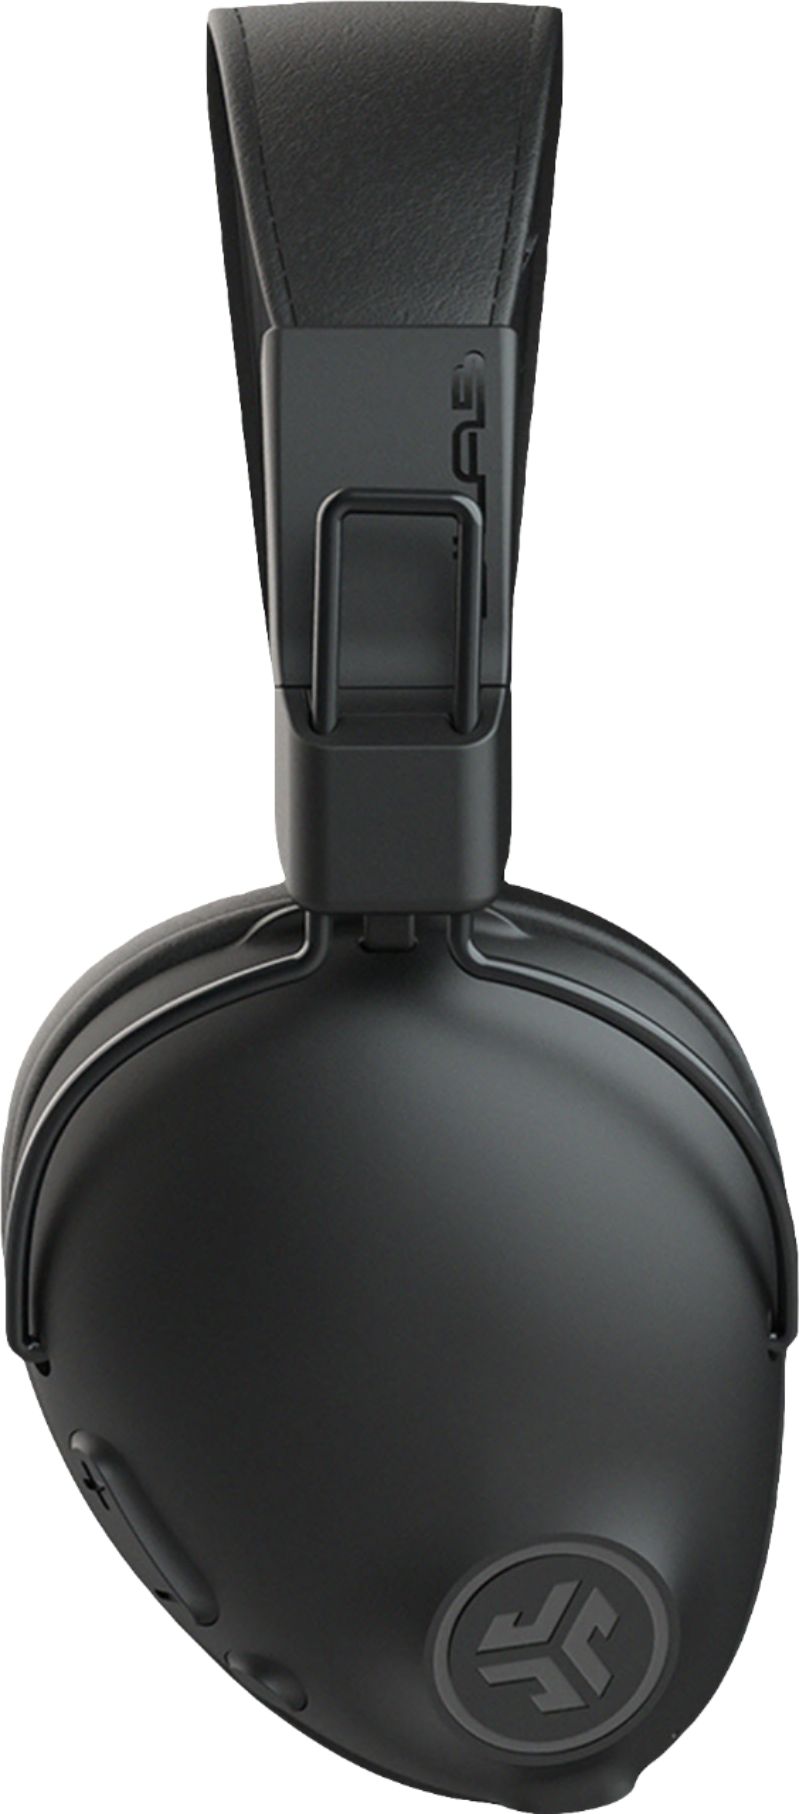 Angle View: JLab - Studio Pro Wireless Headphones - Black